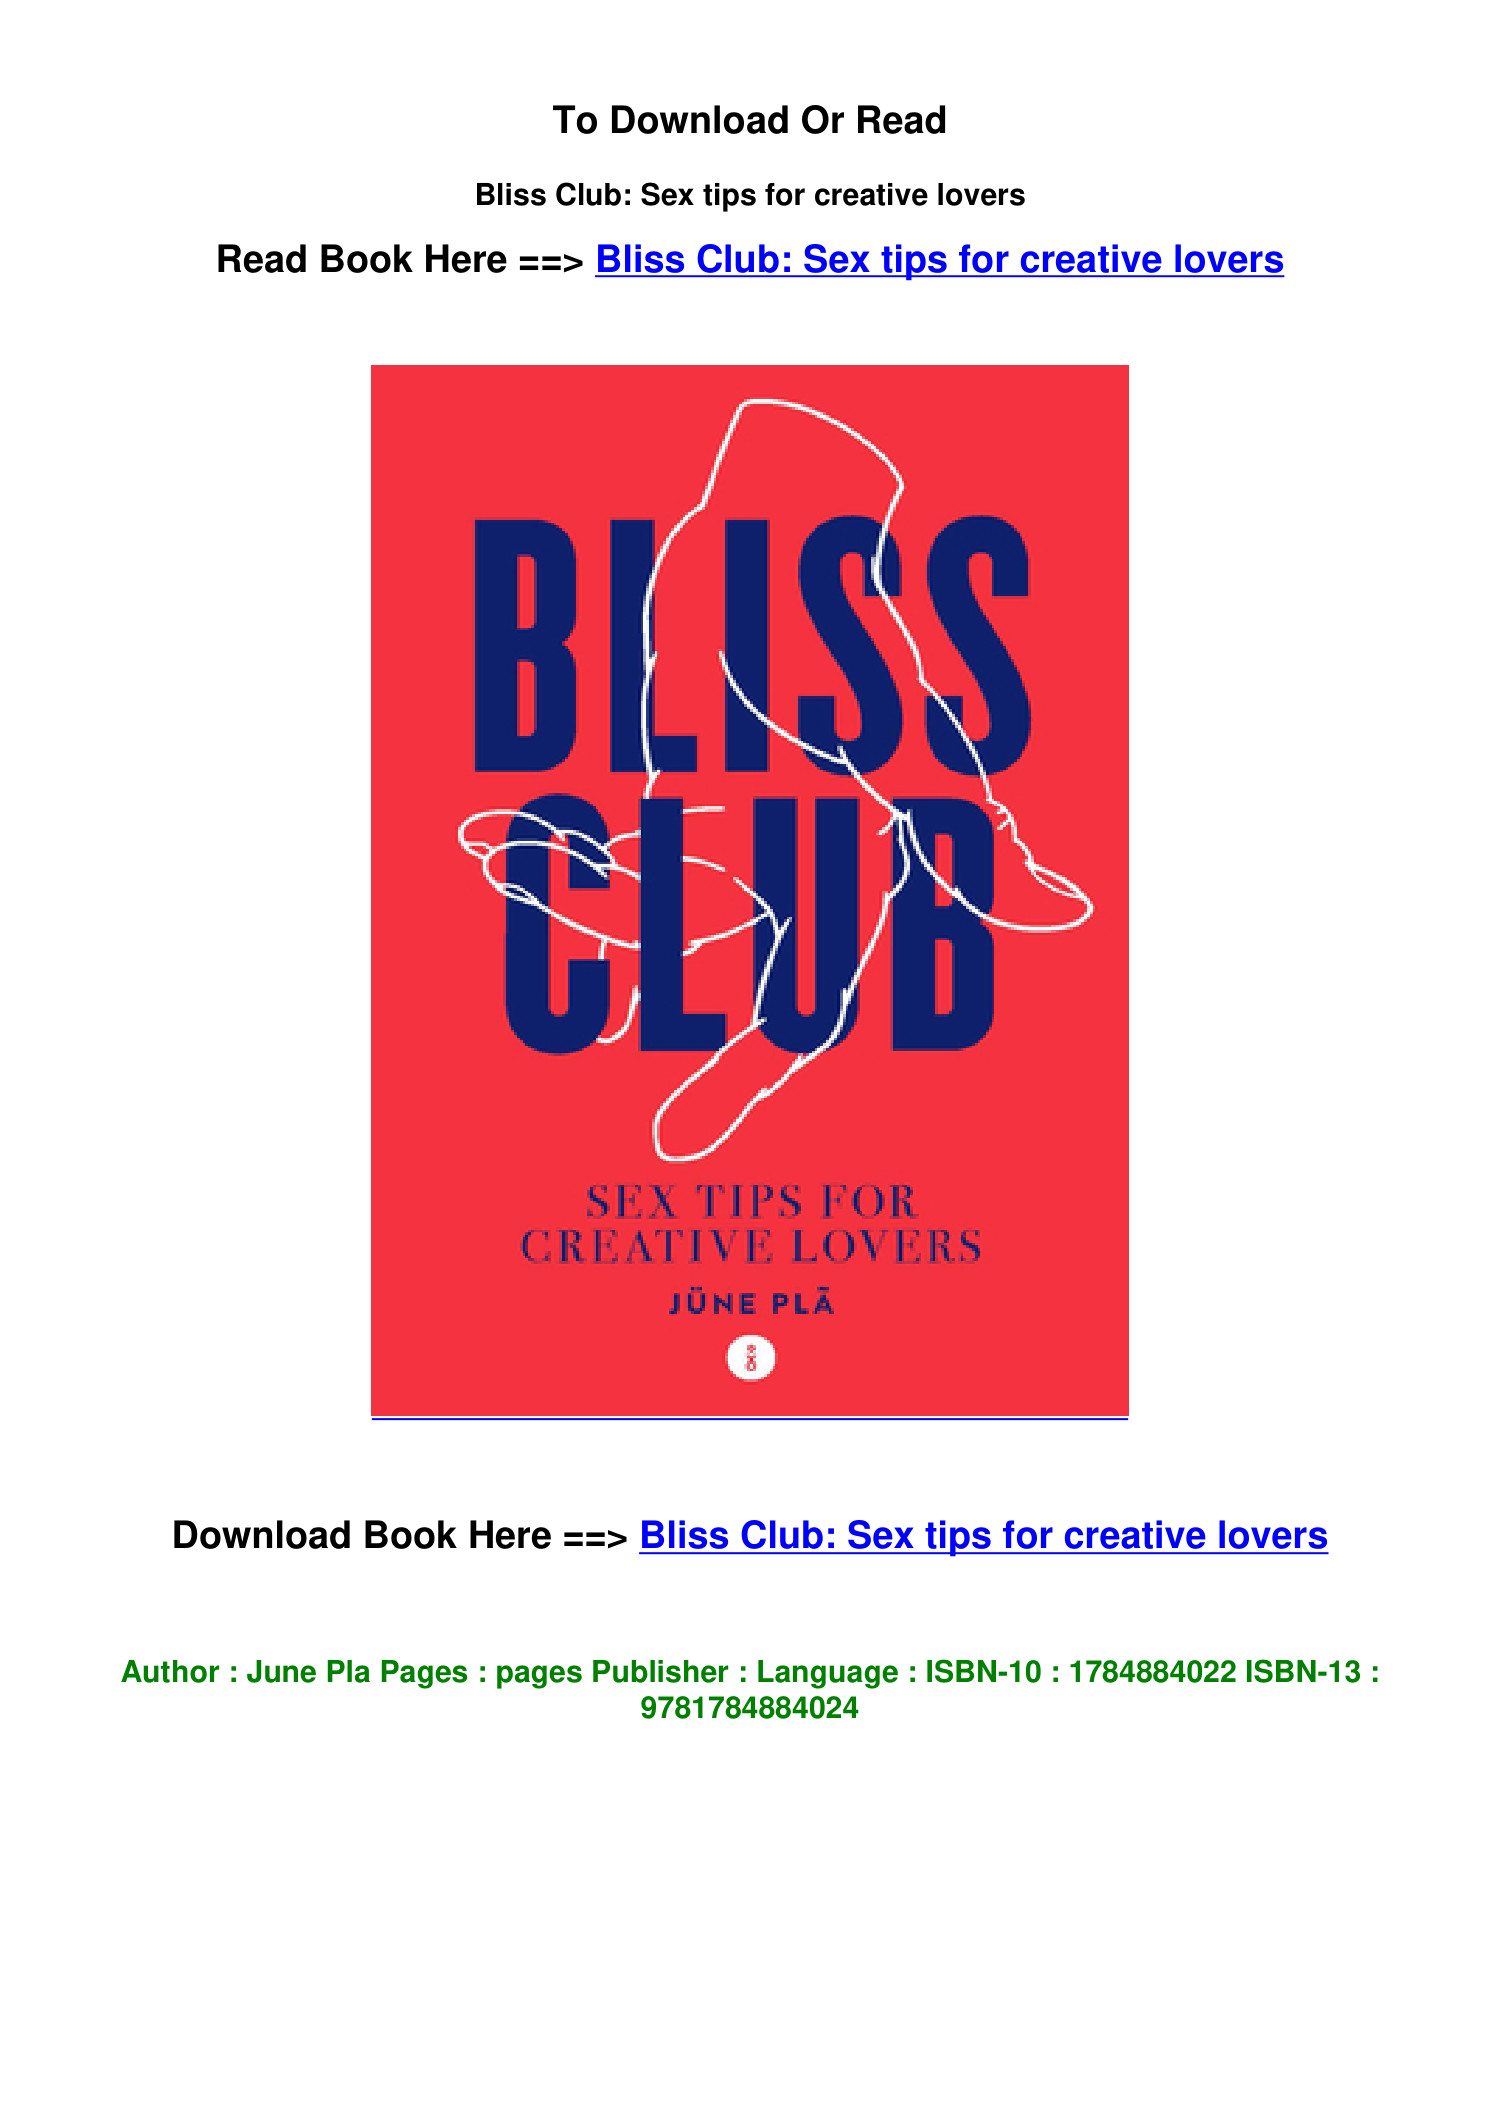 https://www.docdroid.net/file/view/izJb9Xo/download-epub-bliss-club-sex-tips-for-creative-lovers-by-june-pla-pdf.jpg